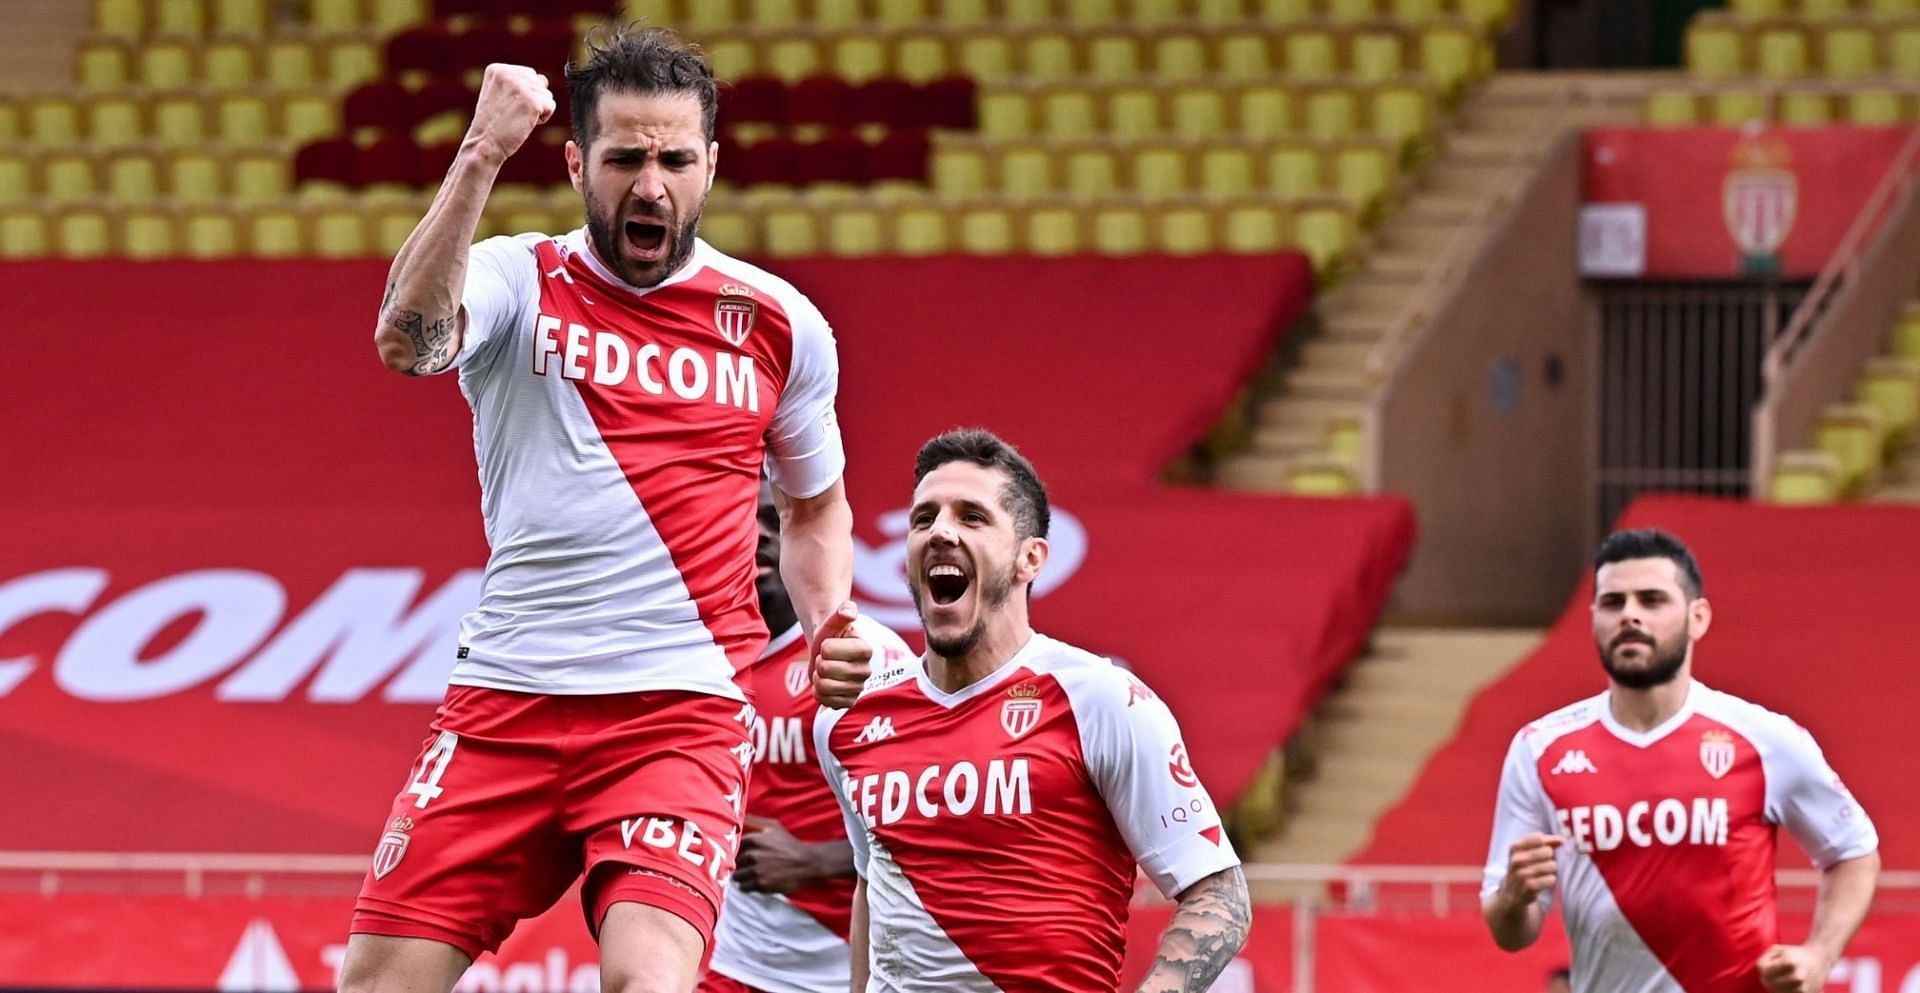 Monaco will face Lens on Sunday - Coupe de France